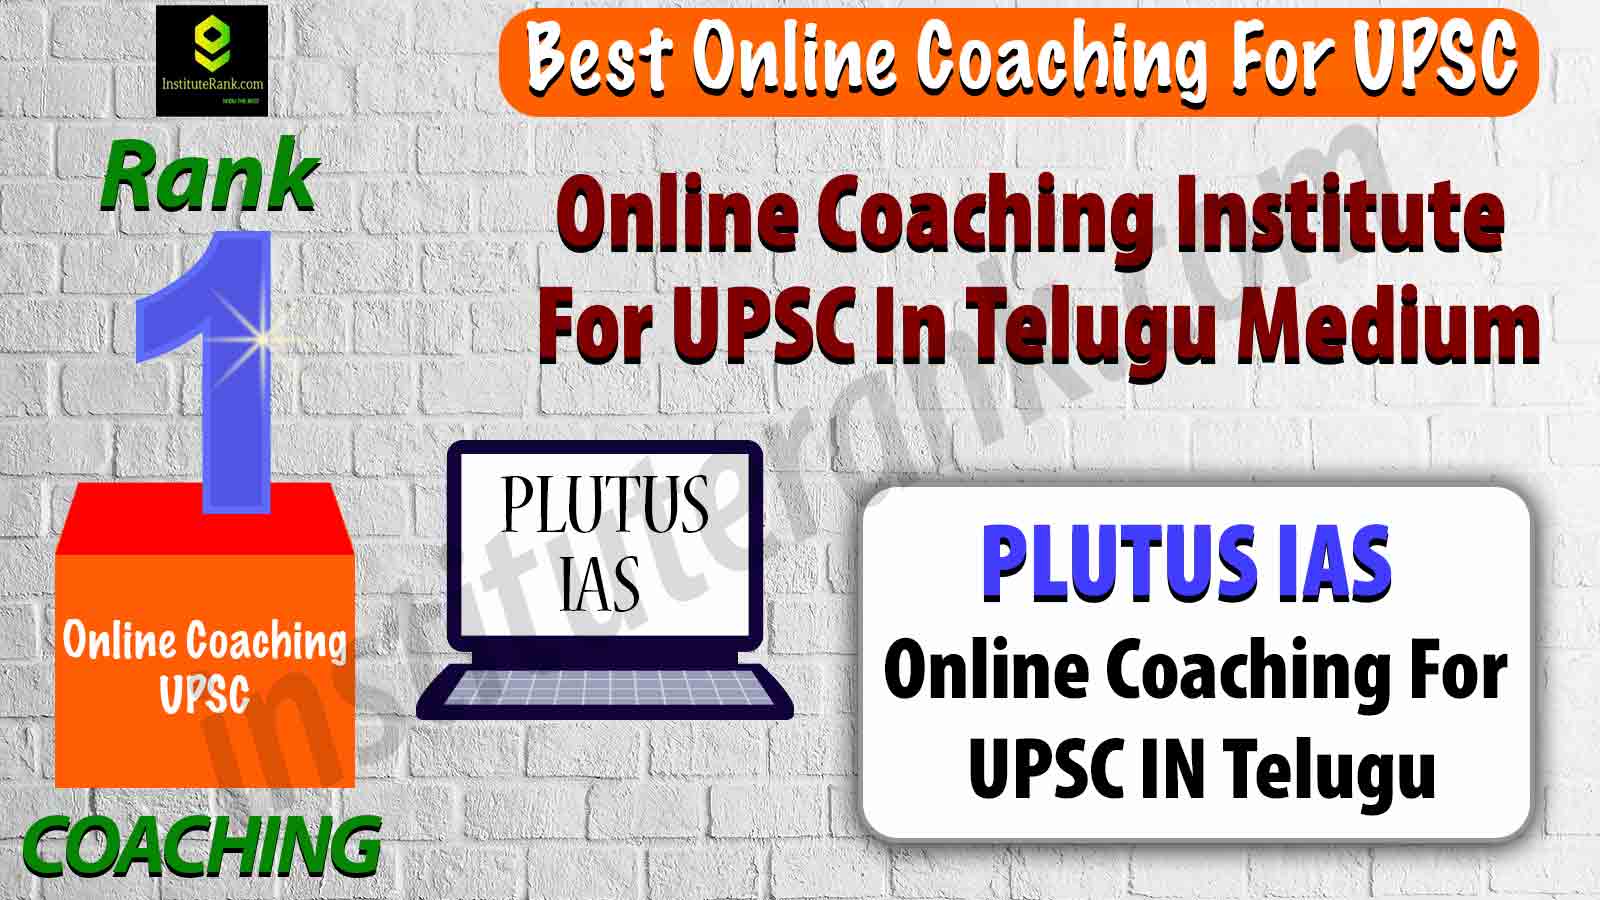 Top Online Coaching For UPSC in Telugu Medium